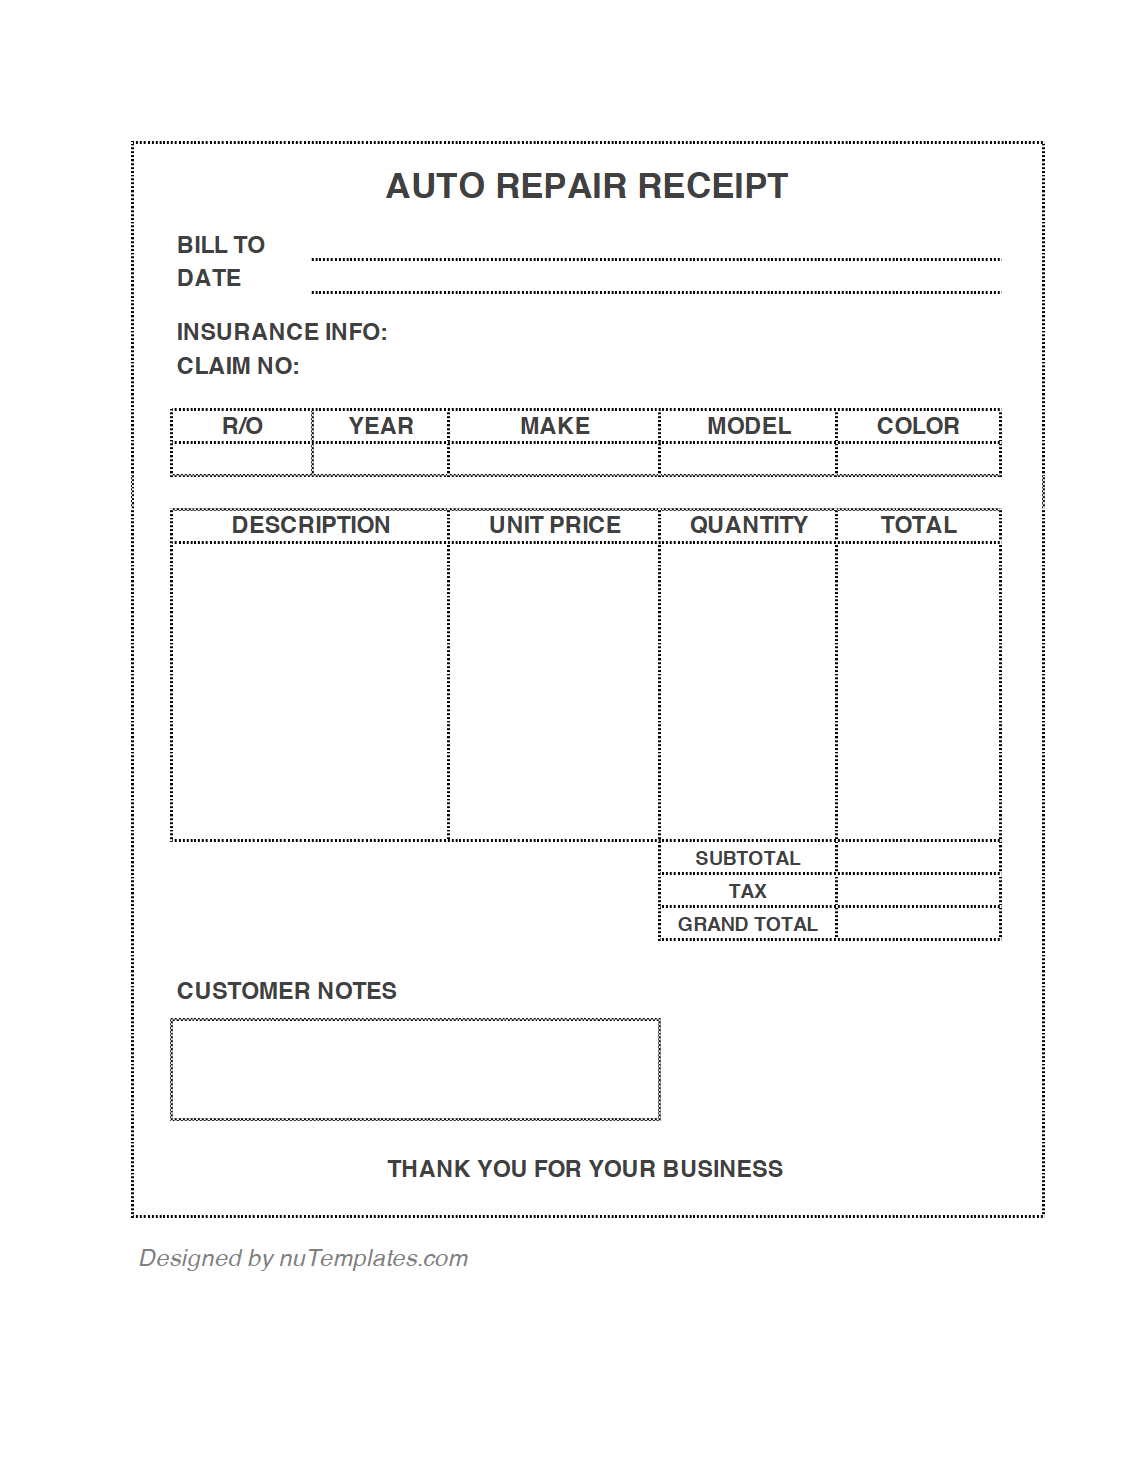 Auto Repair Receipt Template Auto Repair Receipts NuTemplates